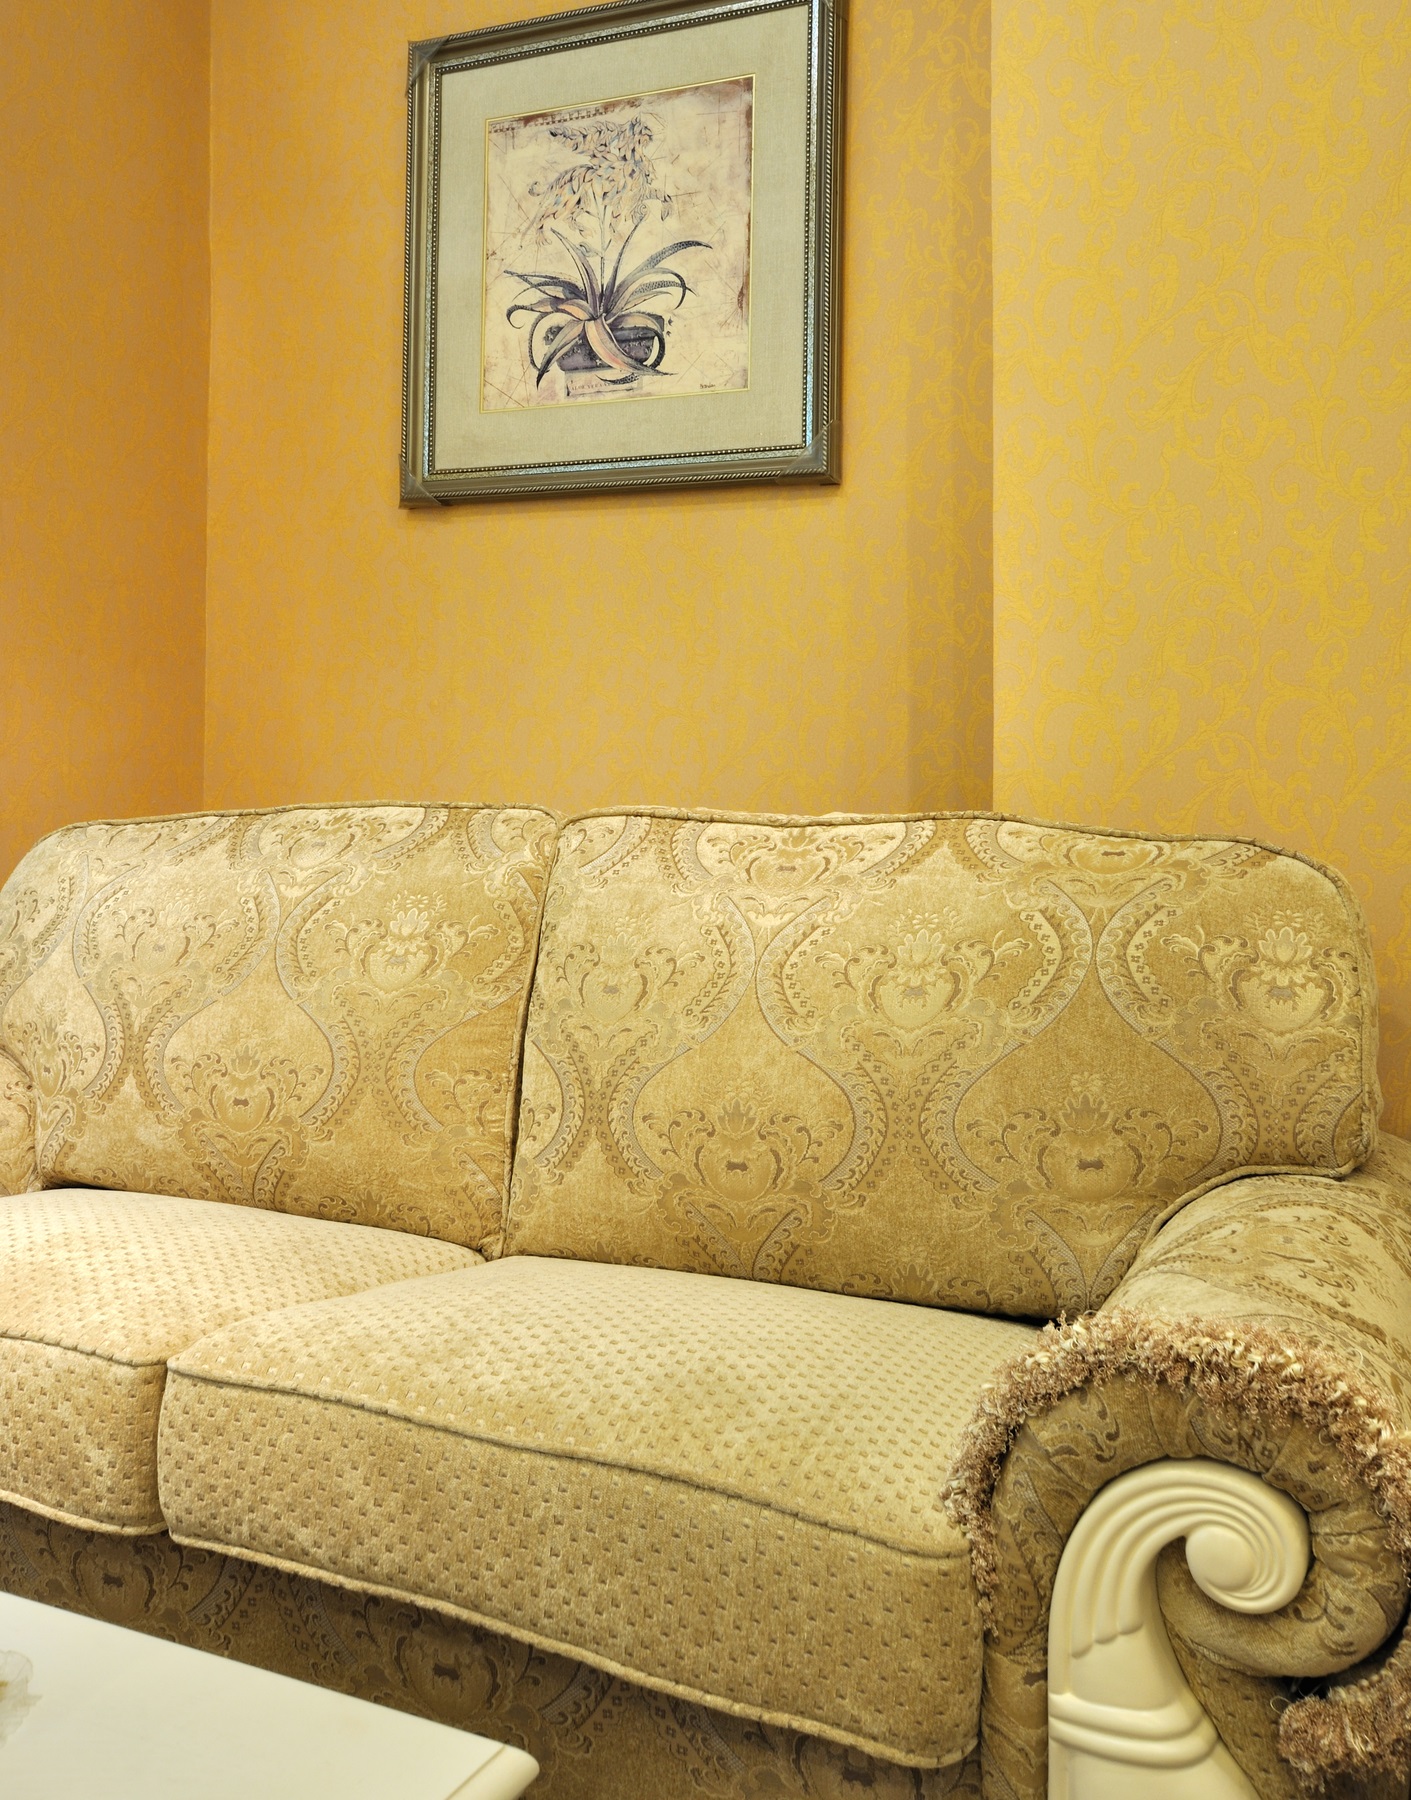 Room interior and cloth sofa